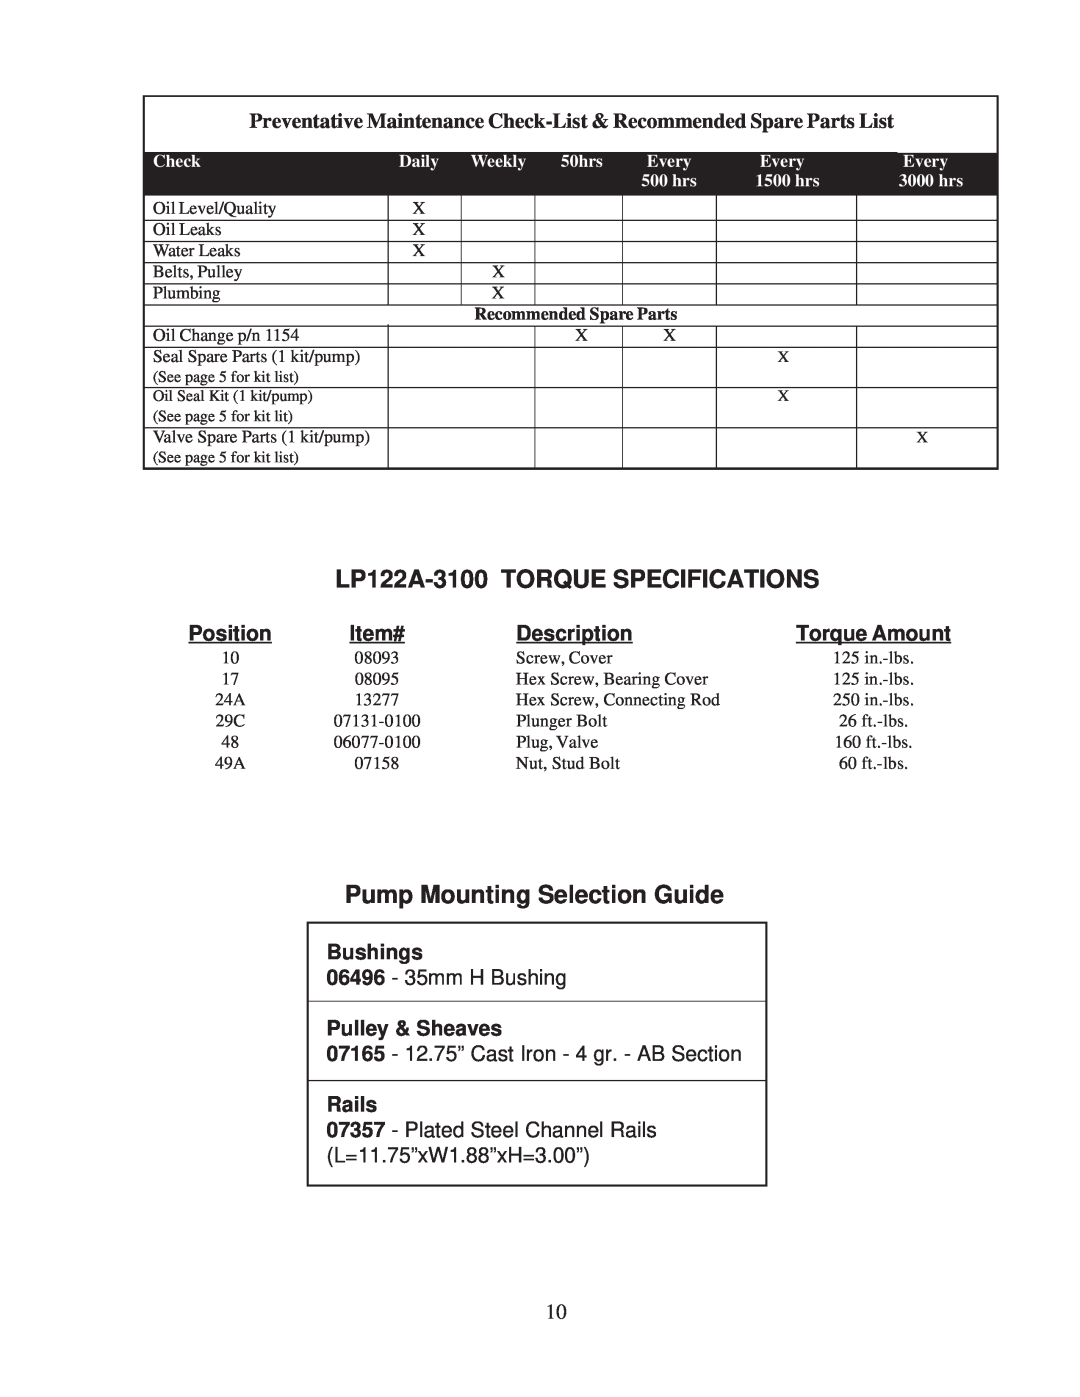 Giant LP122A-3100 TORQUE SPECIFICATIONS, Pump Mounting Selection Guide, Position, Item#, Description, Bushings, Rails 